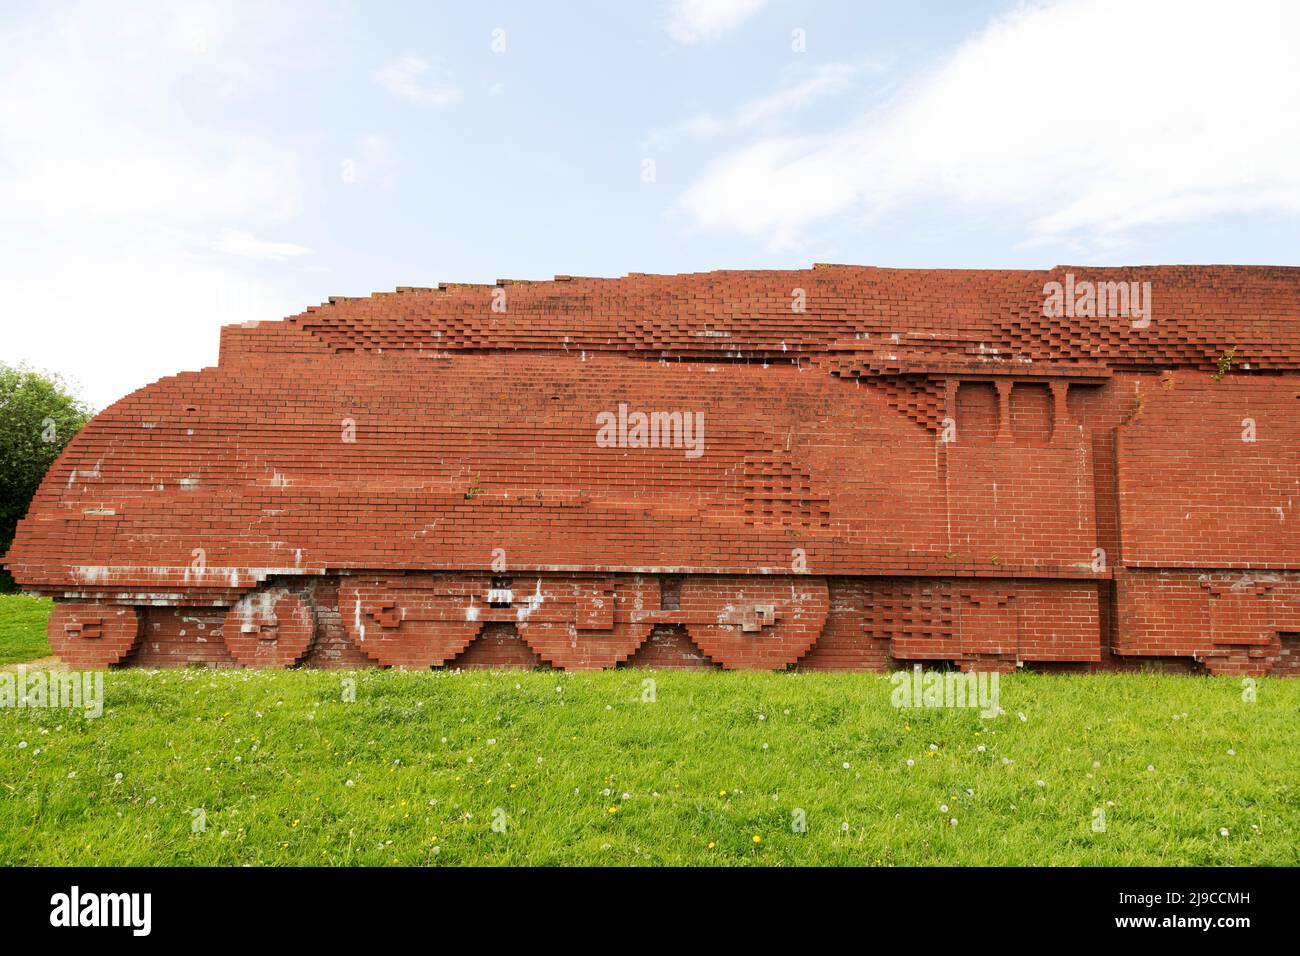 Darlington Brick Train a Darlington, contea di Durham, Inghilterra. La scultura in muratura raffigura una locomotiva Mallard in fase di accelerazione. Foto Stock